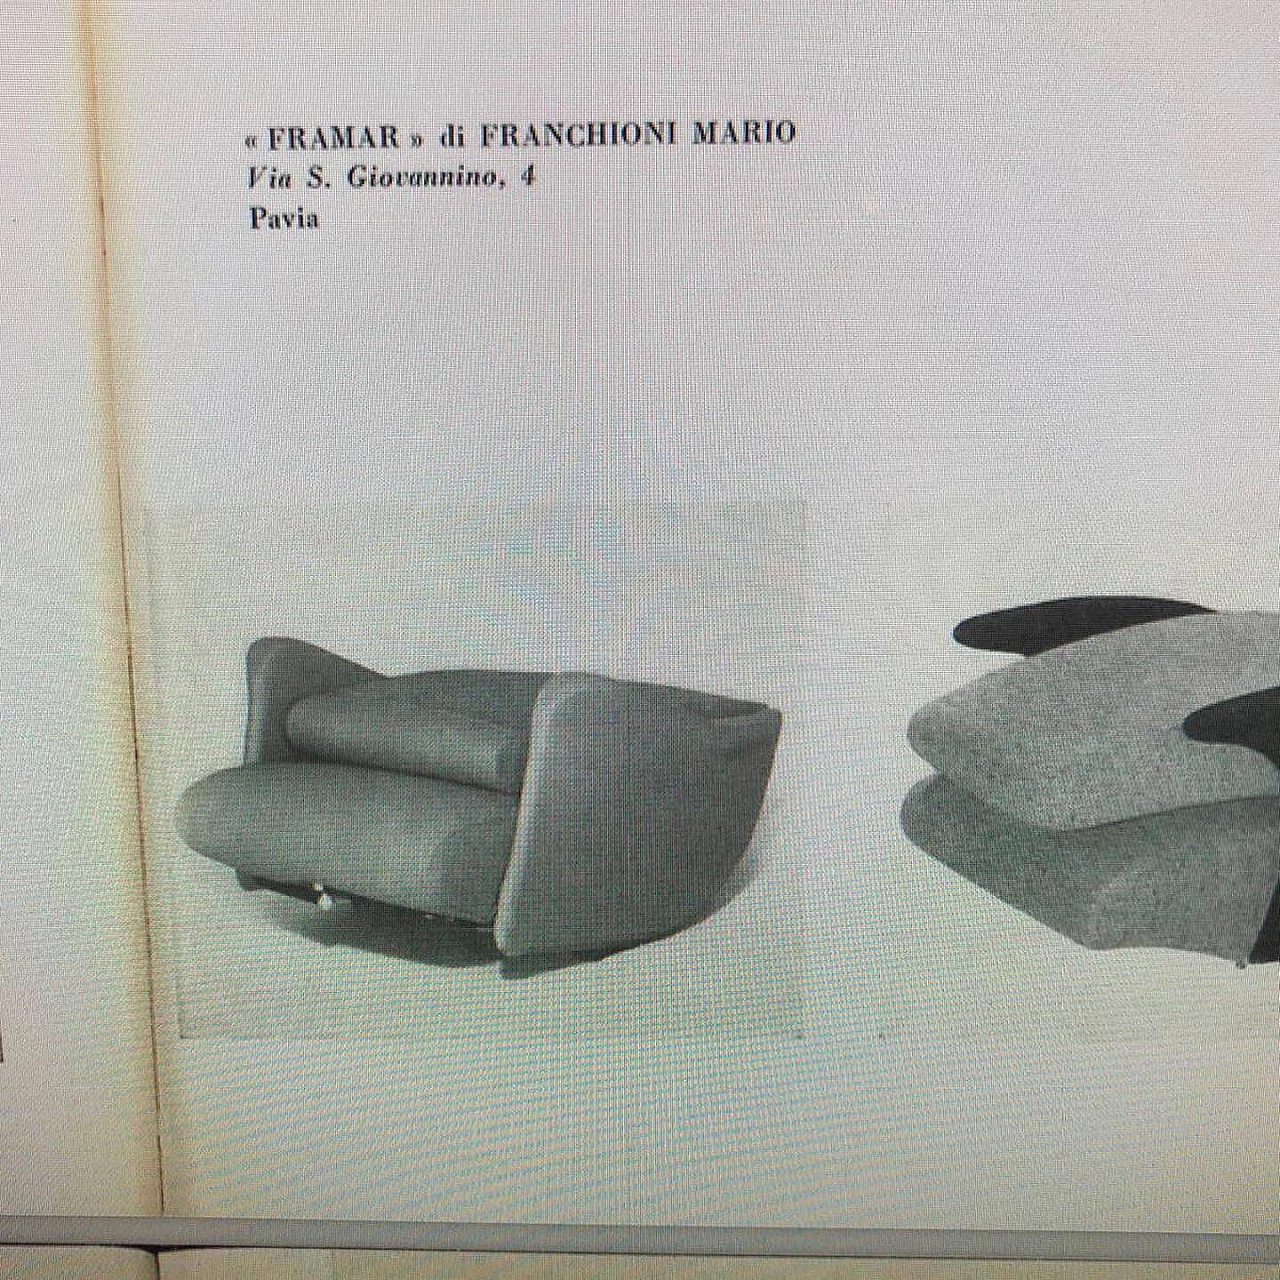 Mario Franchioni's living room set for Framar, 1950s 1082265